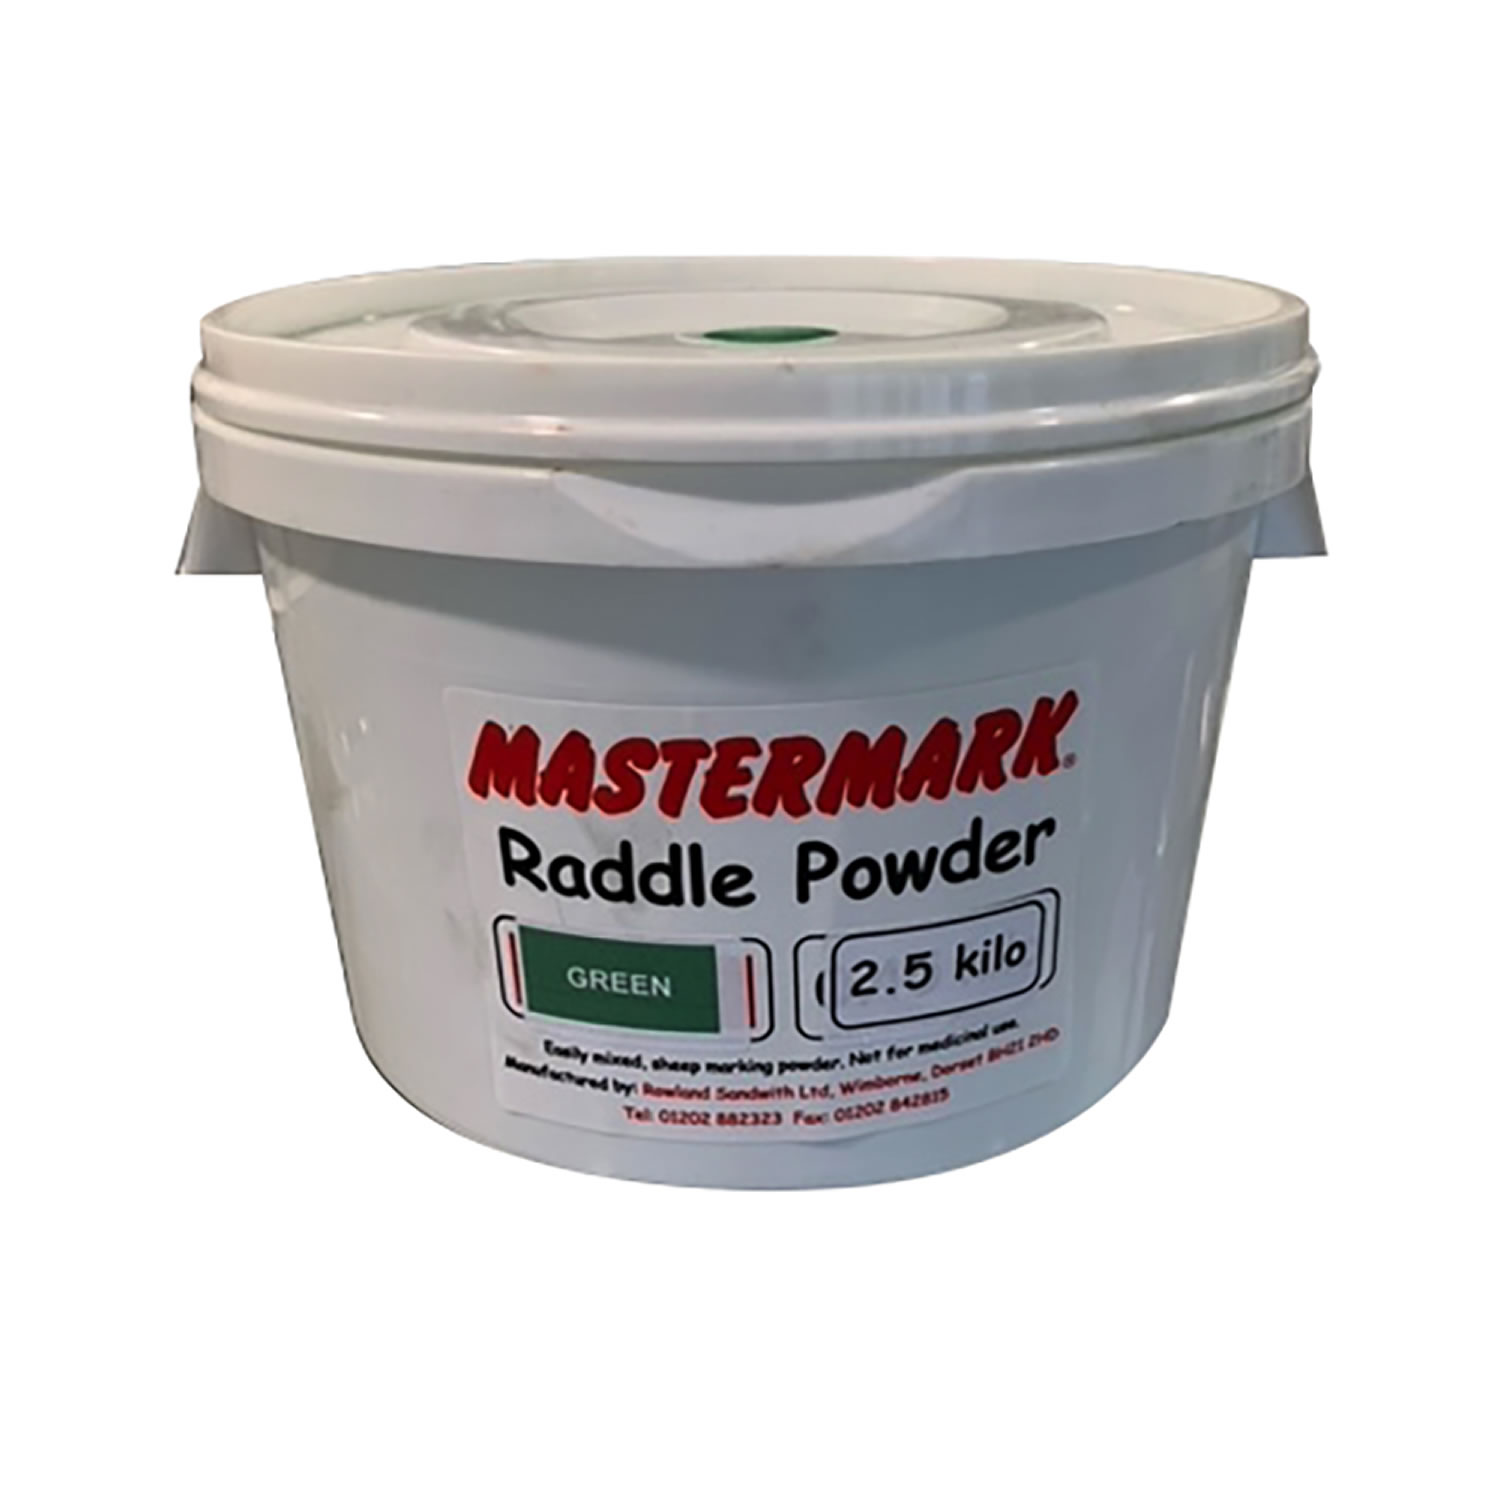 MASTERMARK RADDLE POWDER GREEN X 2.5 KG